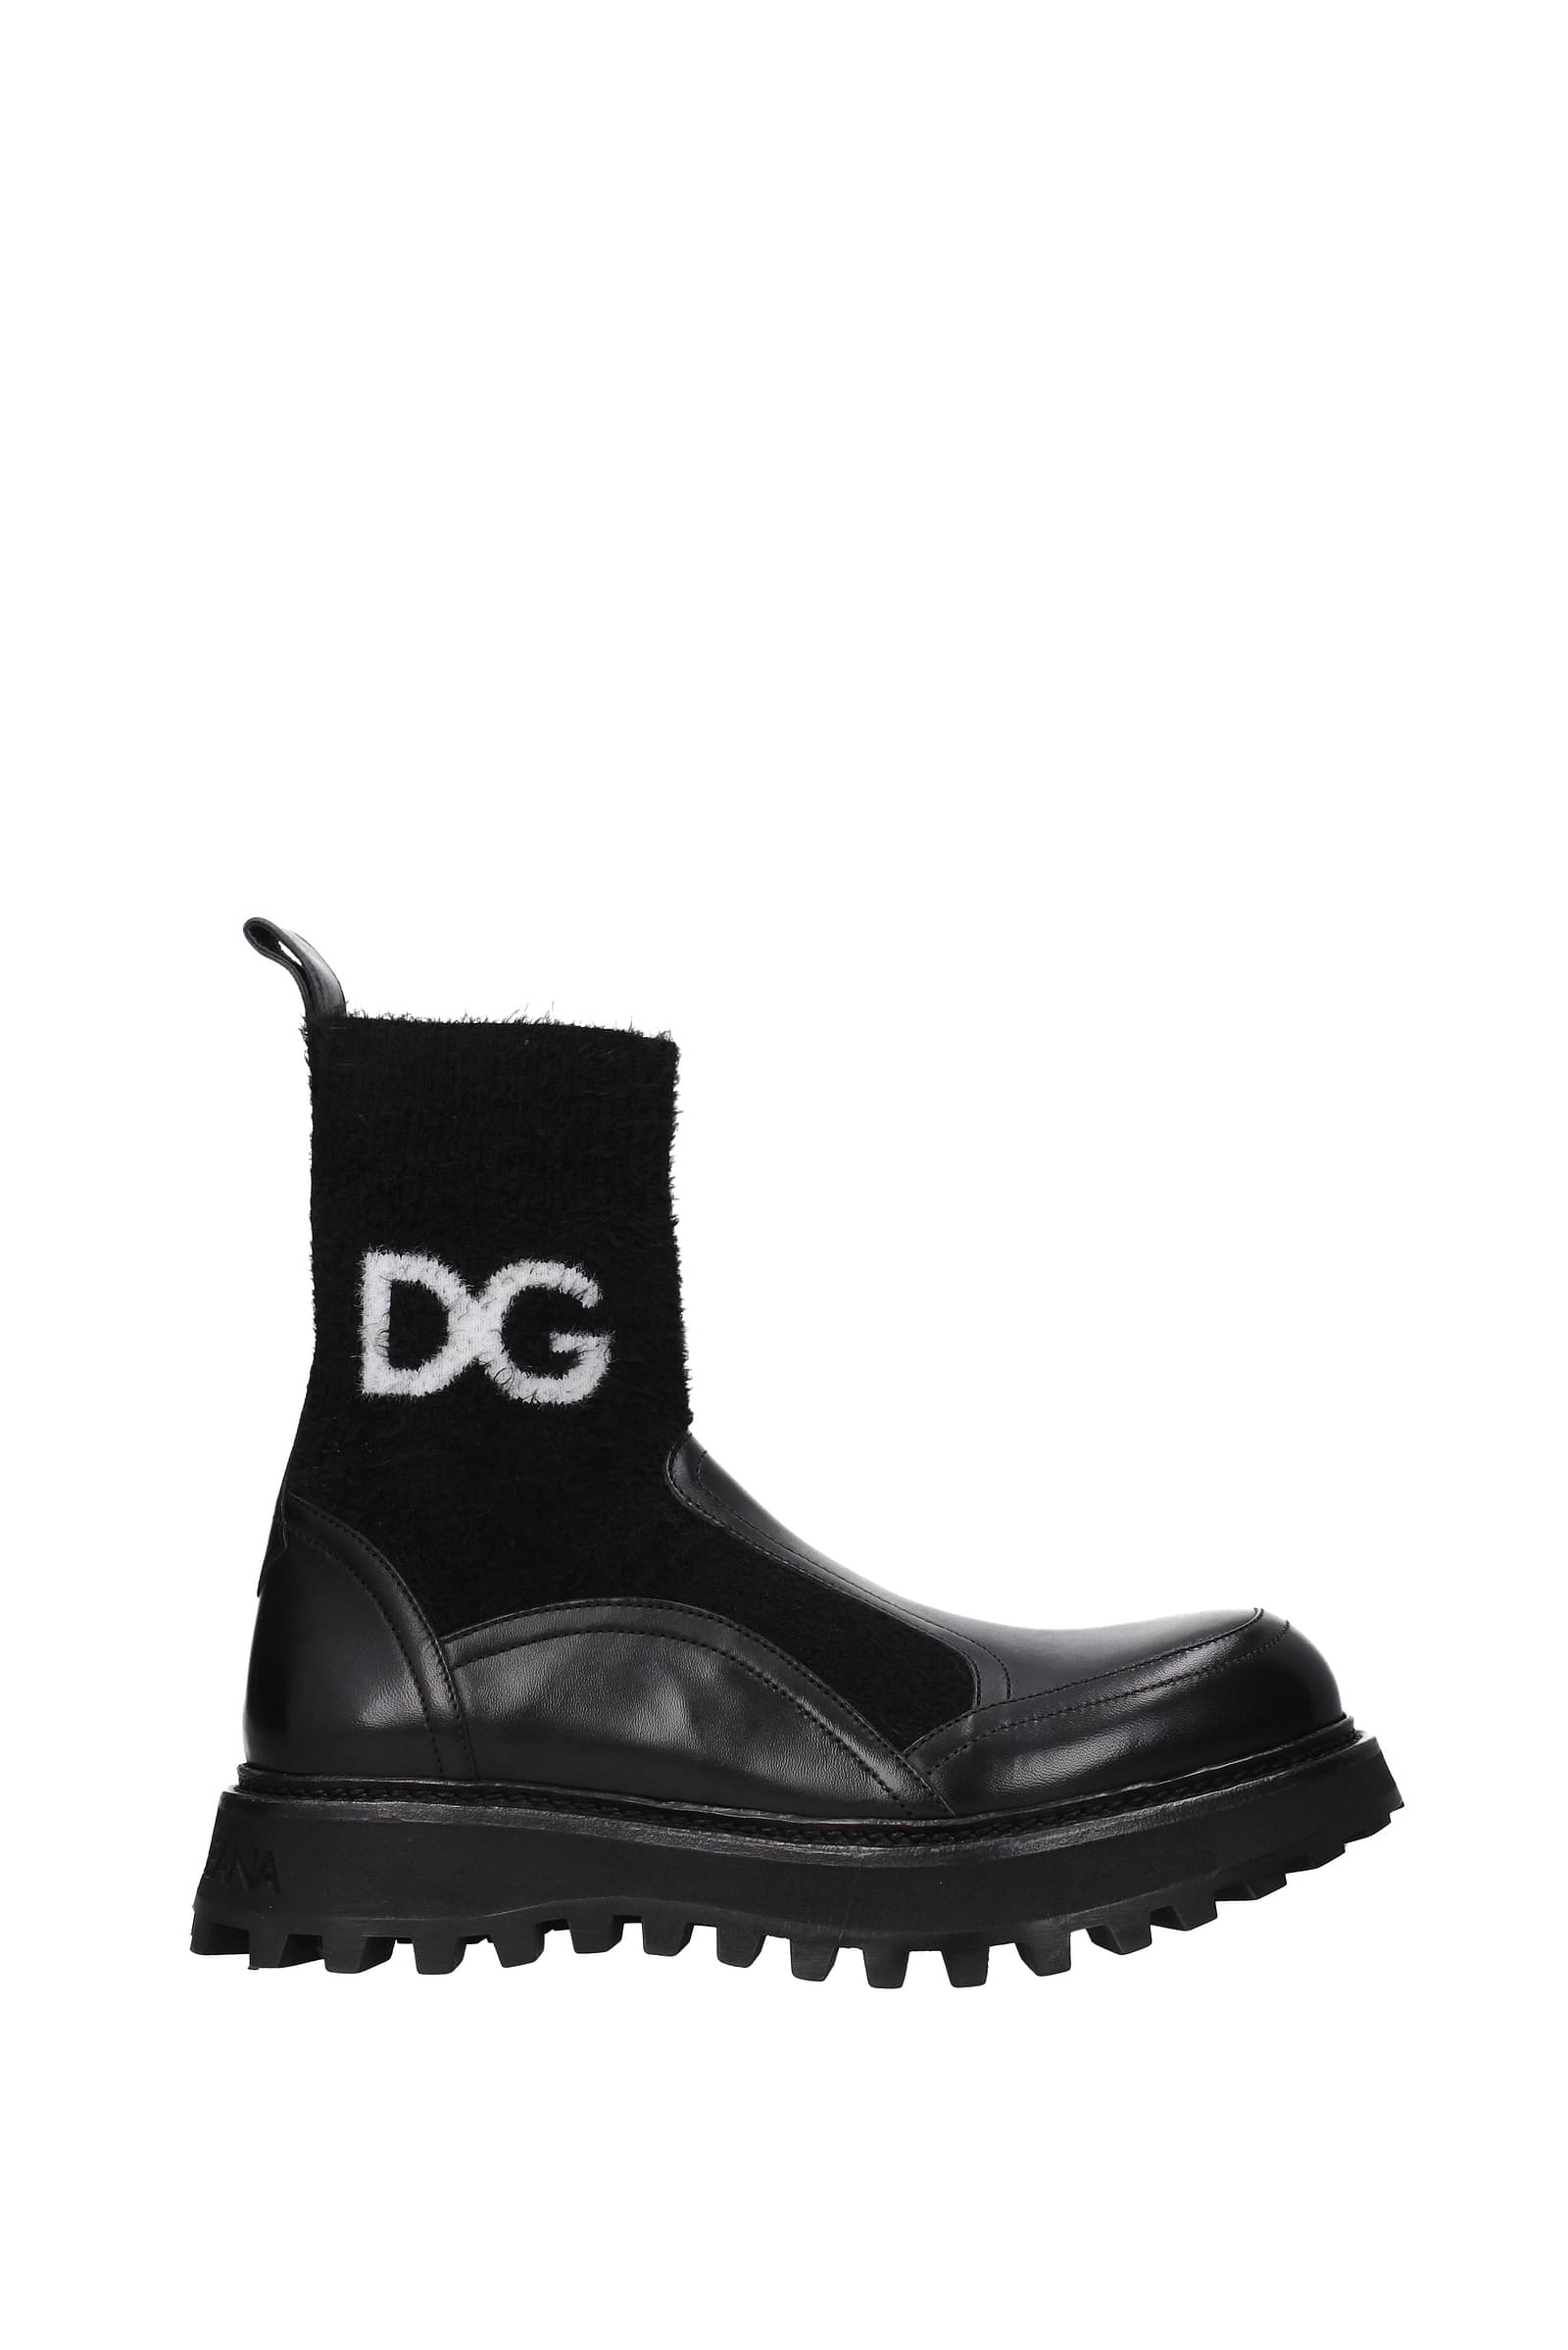 Dolce&Gabbana 踝靴男士A60365AO9068B956 皮革黑色417,38€